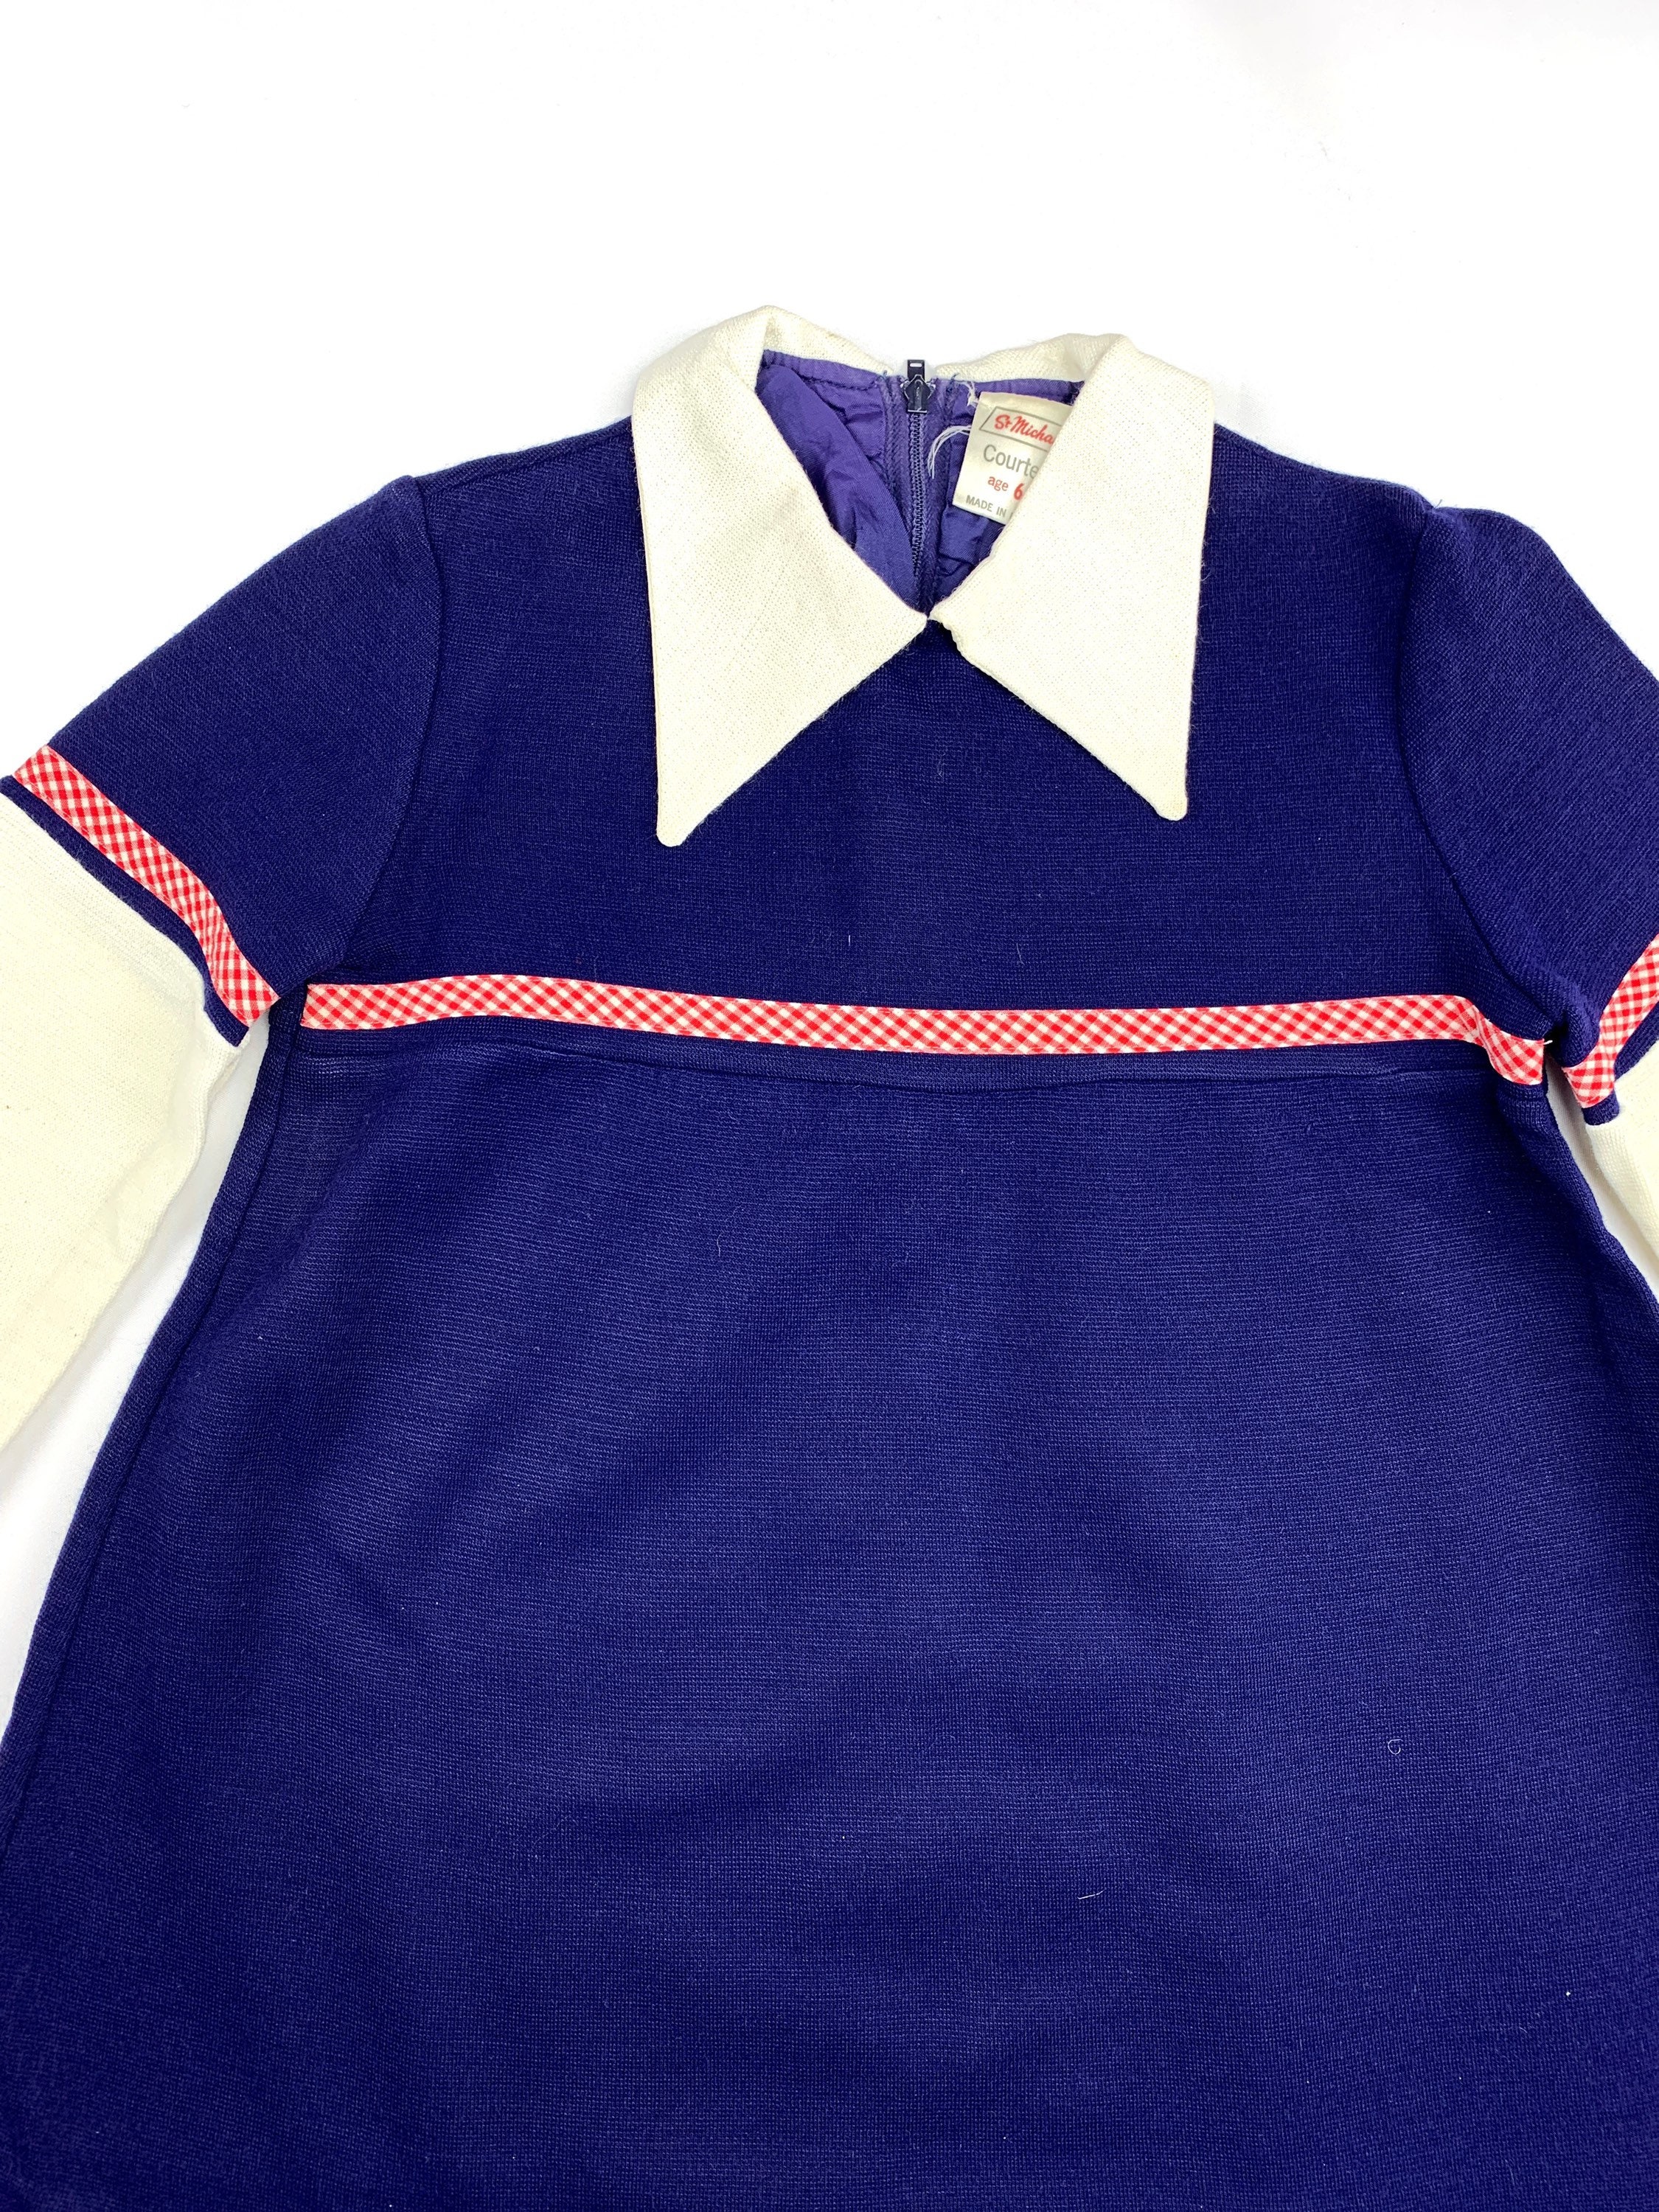 Vintage St. Michael 1970's Girls Long Sleeved Navy Blue | Etsy